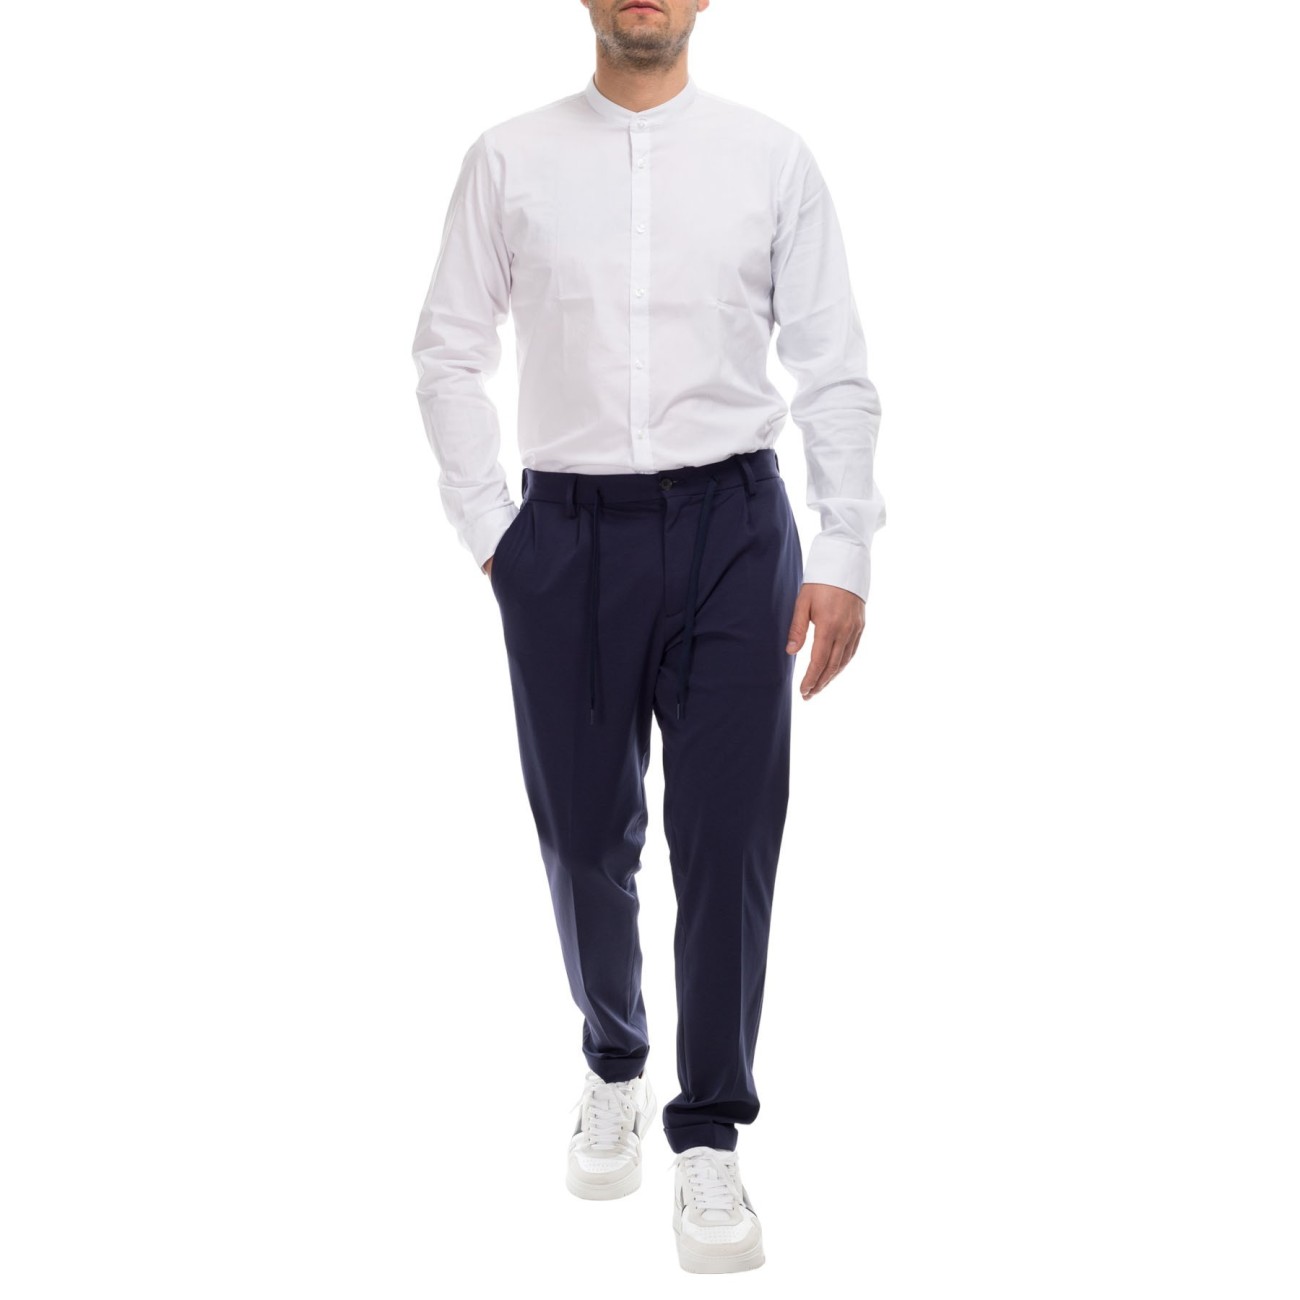 Navy blue pants and white shirt Street style | Roupas com camisa branca,  Roupas chique, Trajes business casual